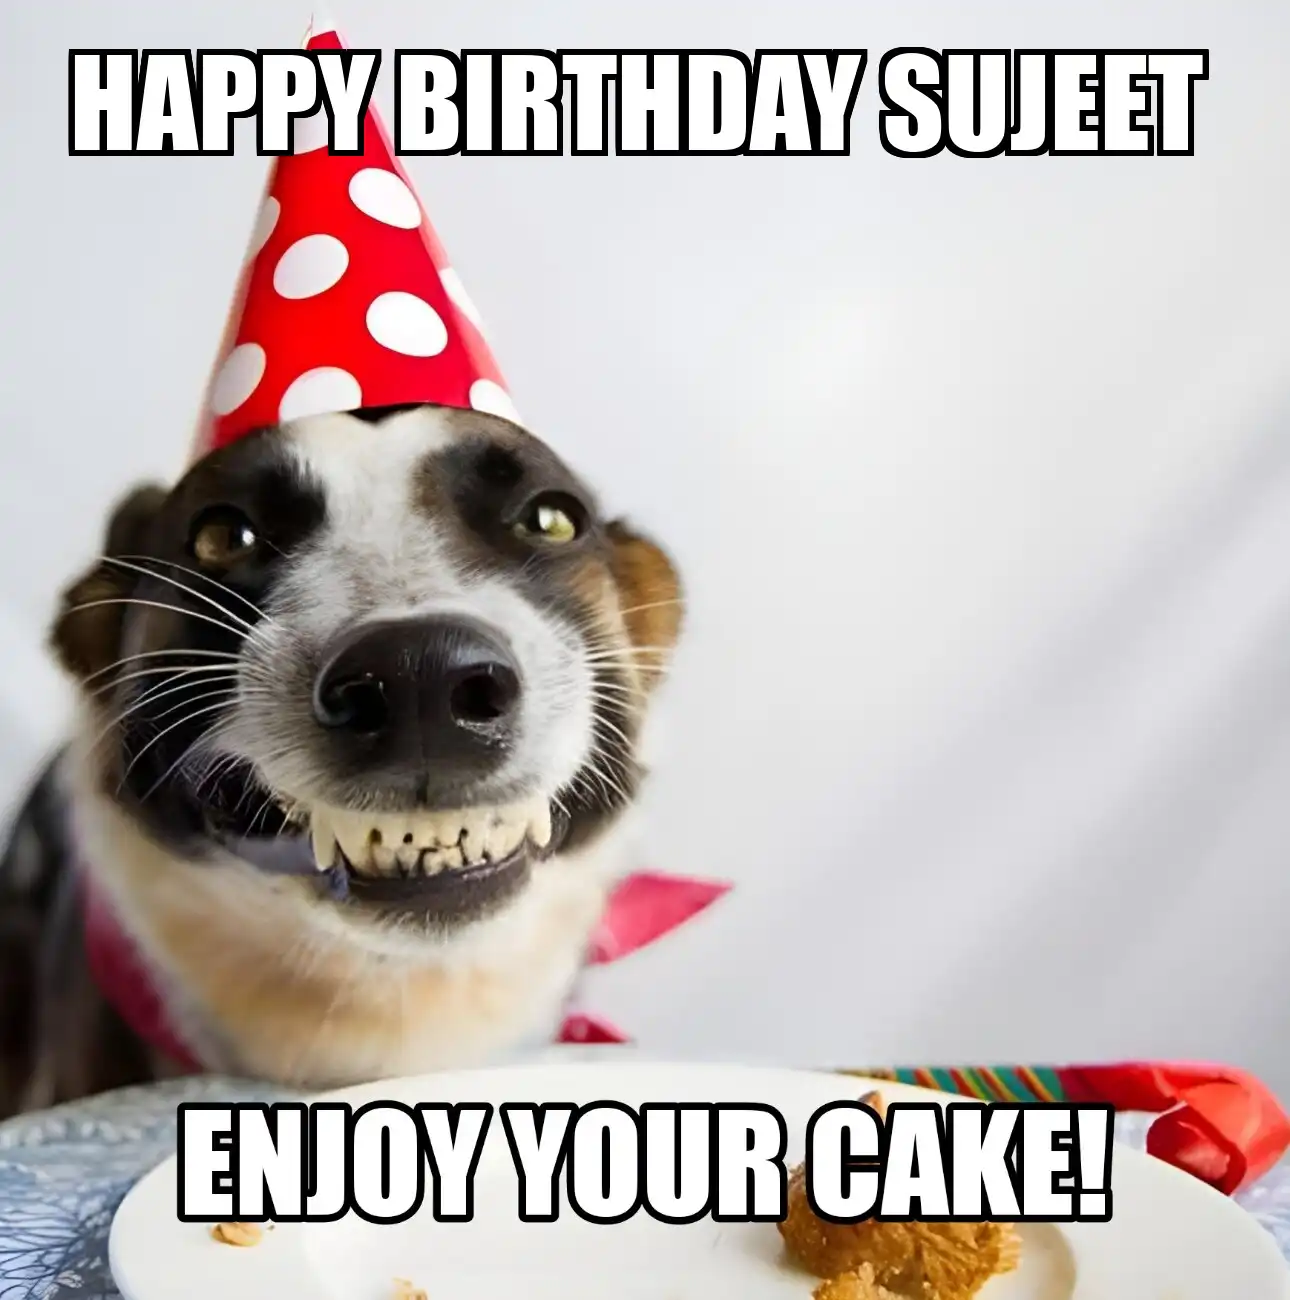 Happy Birthday Sujeet Enjoy Your Cake Dog Meme